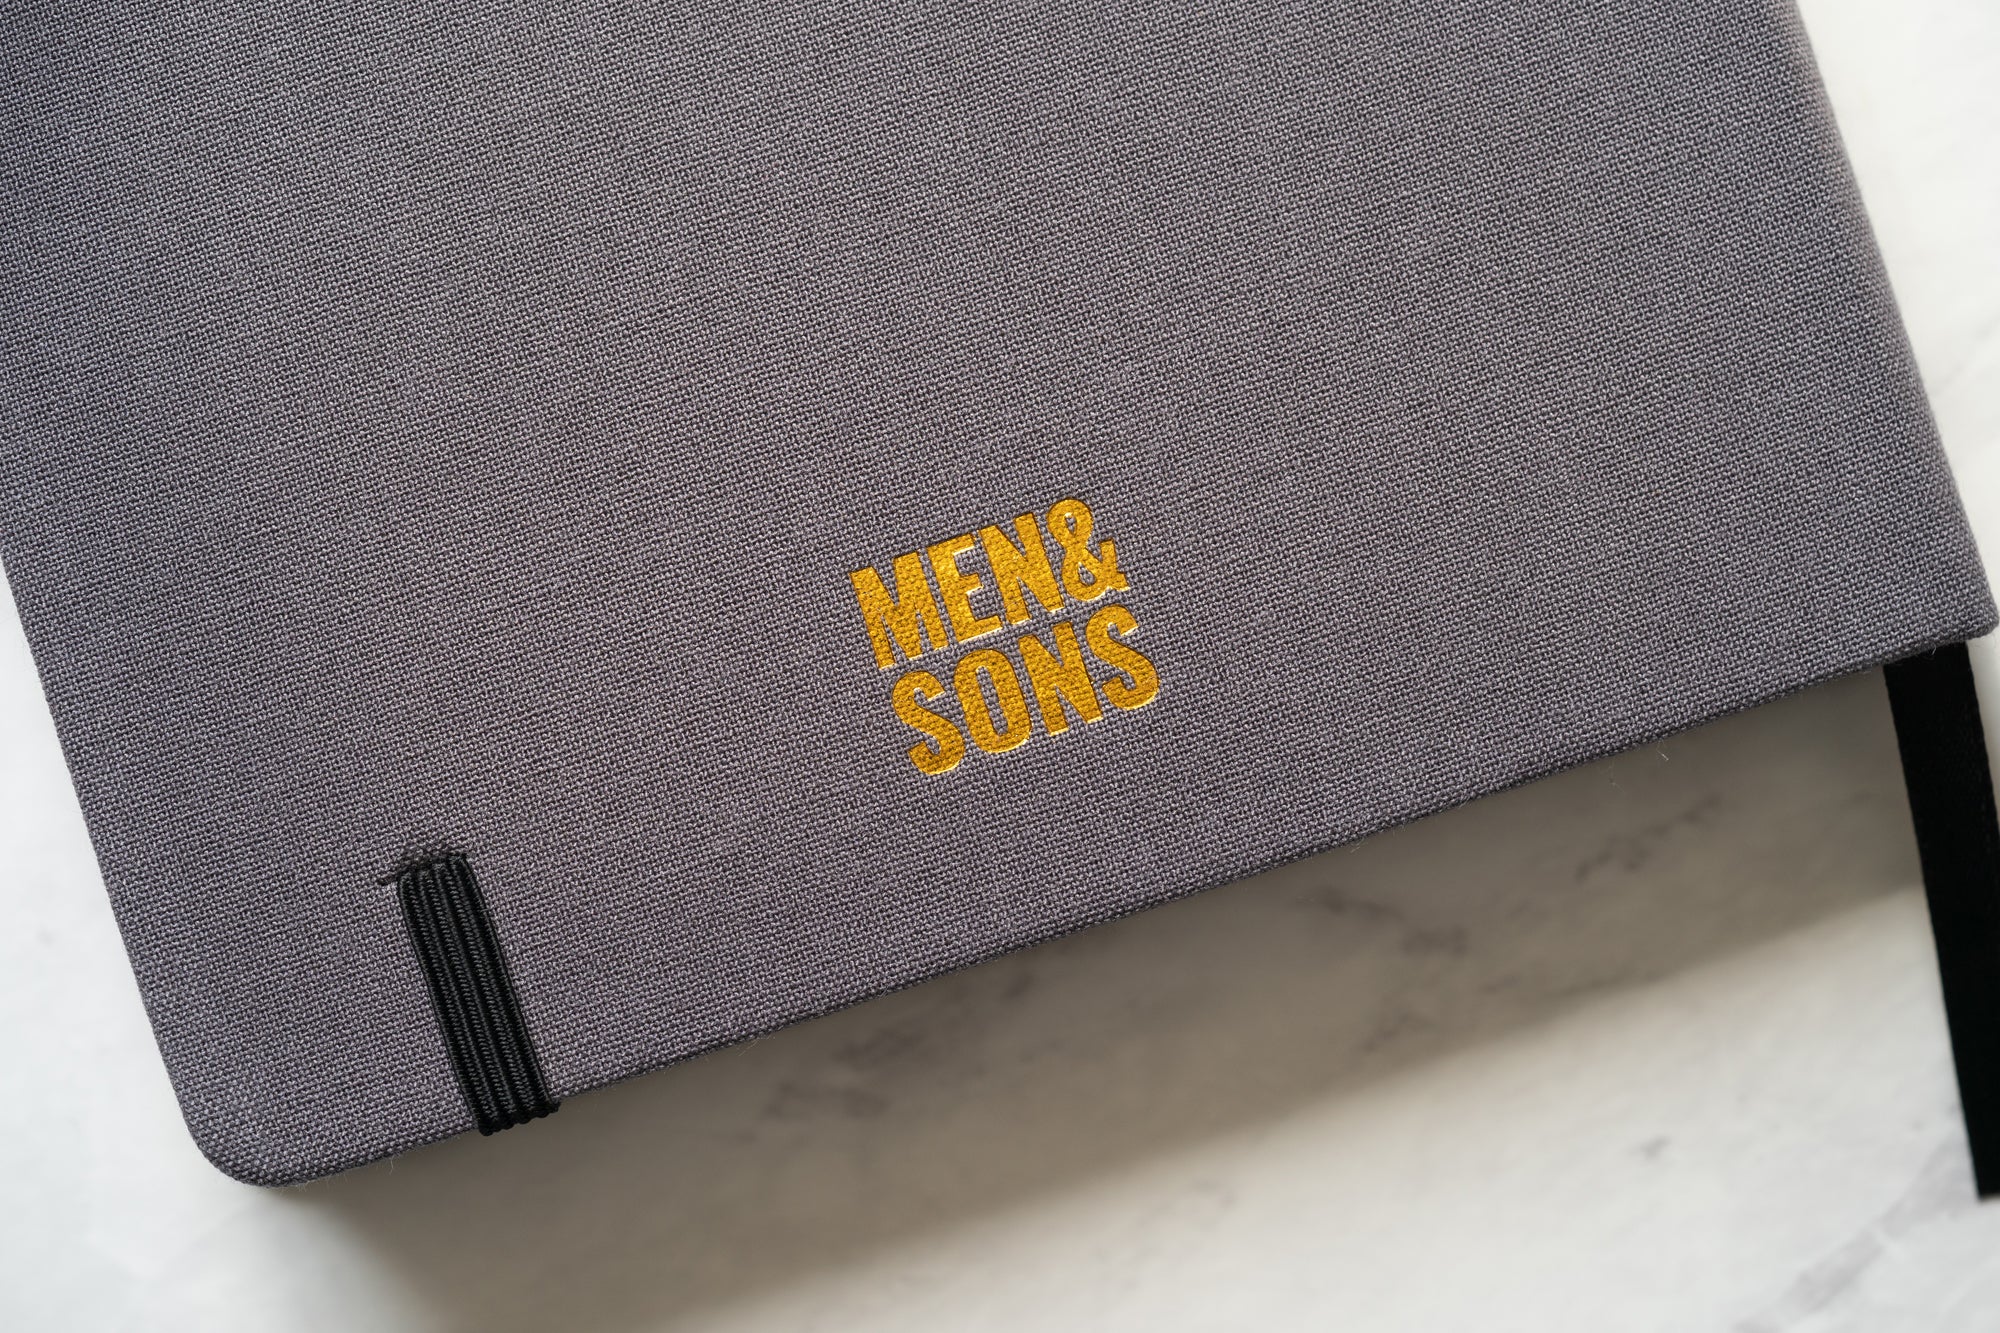 Linen Hard Cover Notebook - Grey